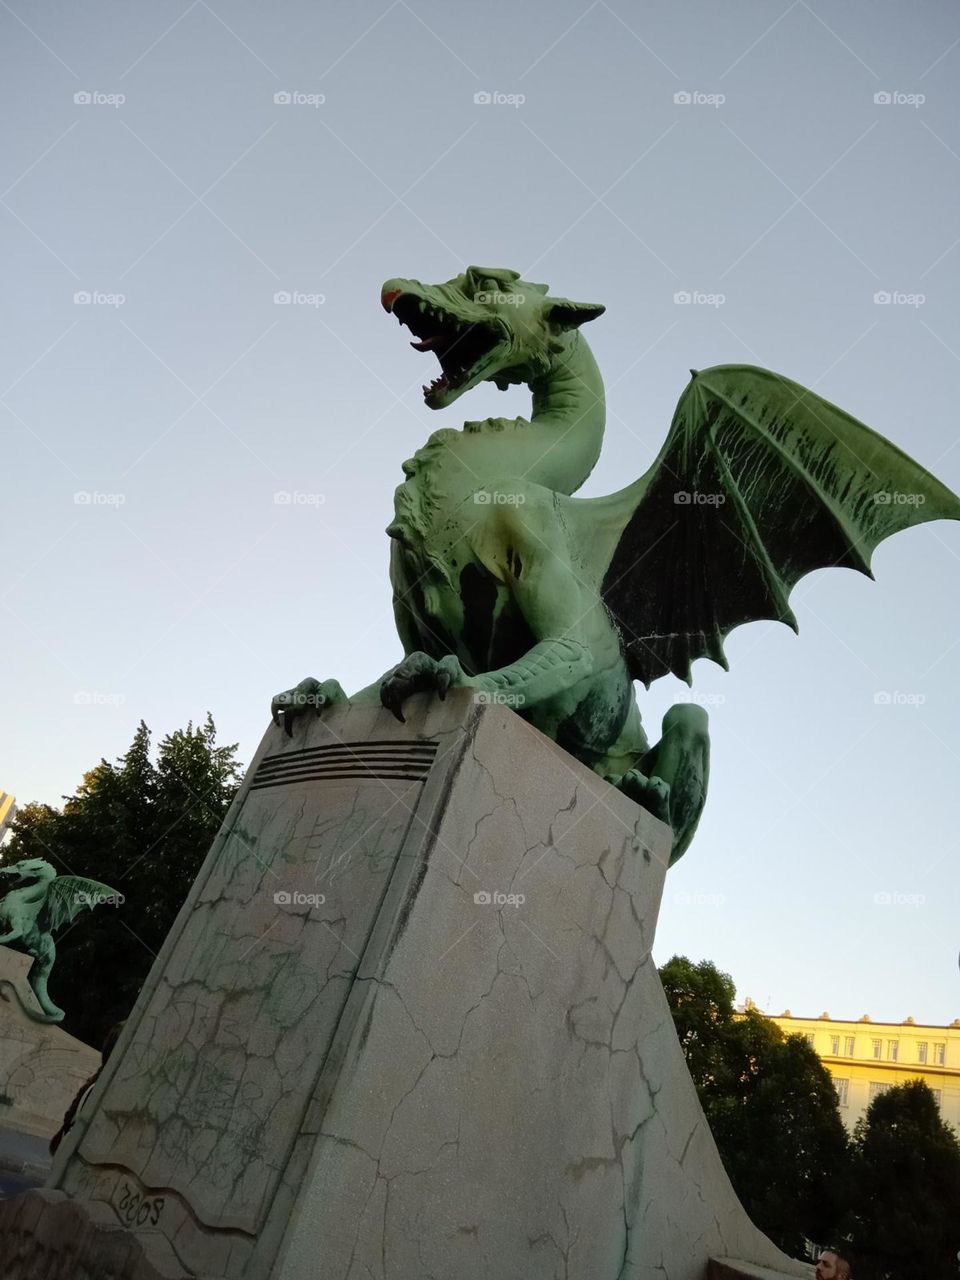 Dragon, Ljubljana landmark